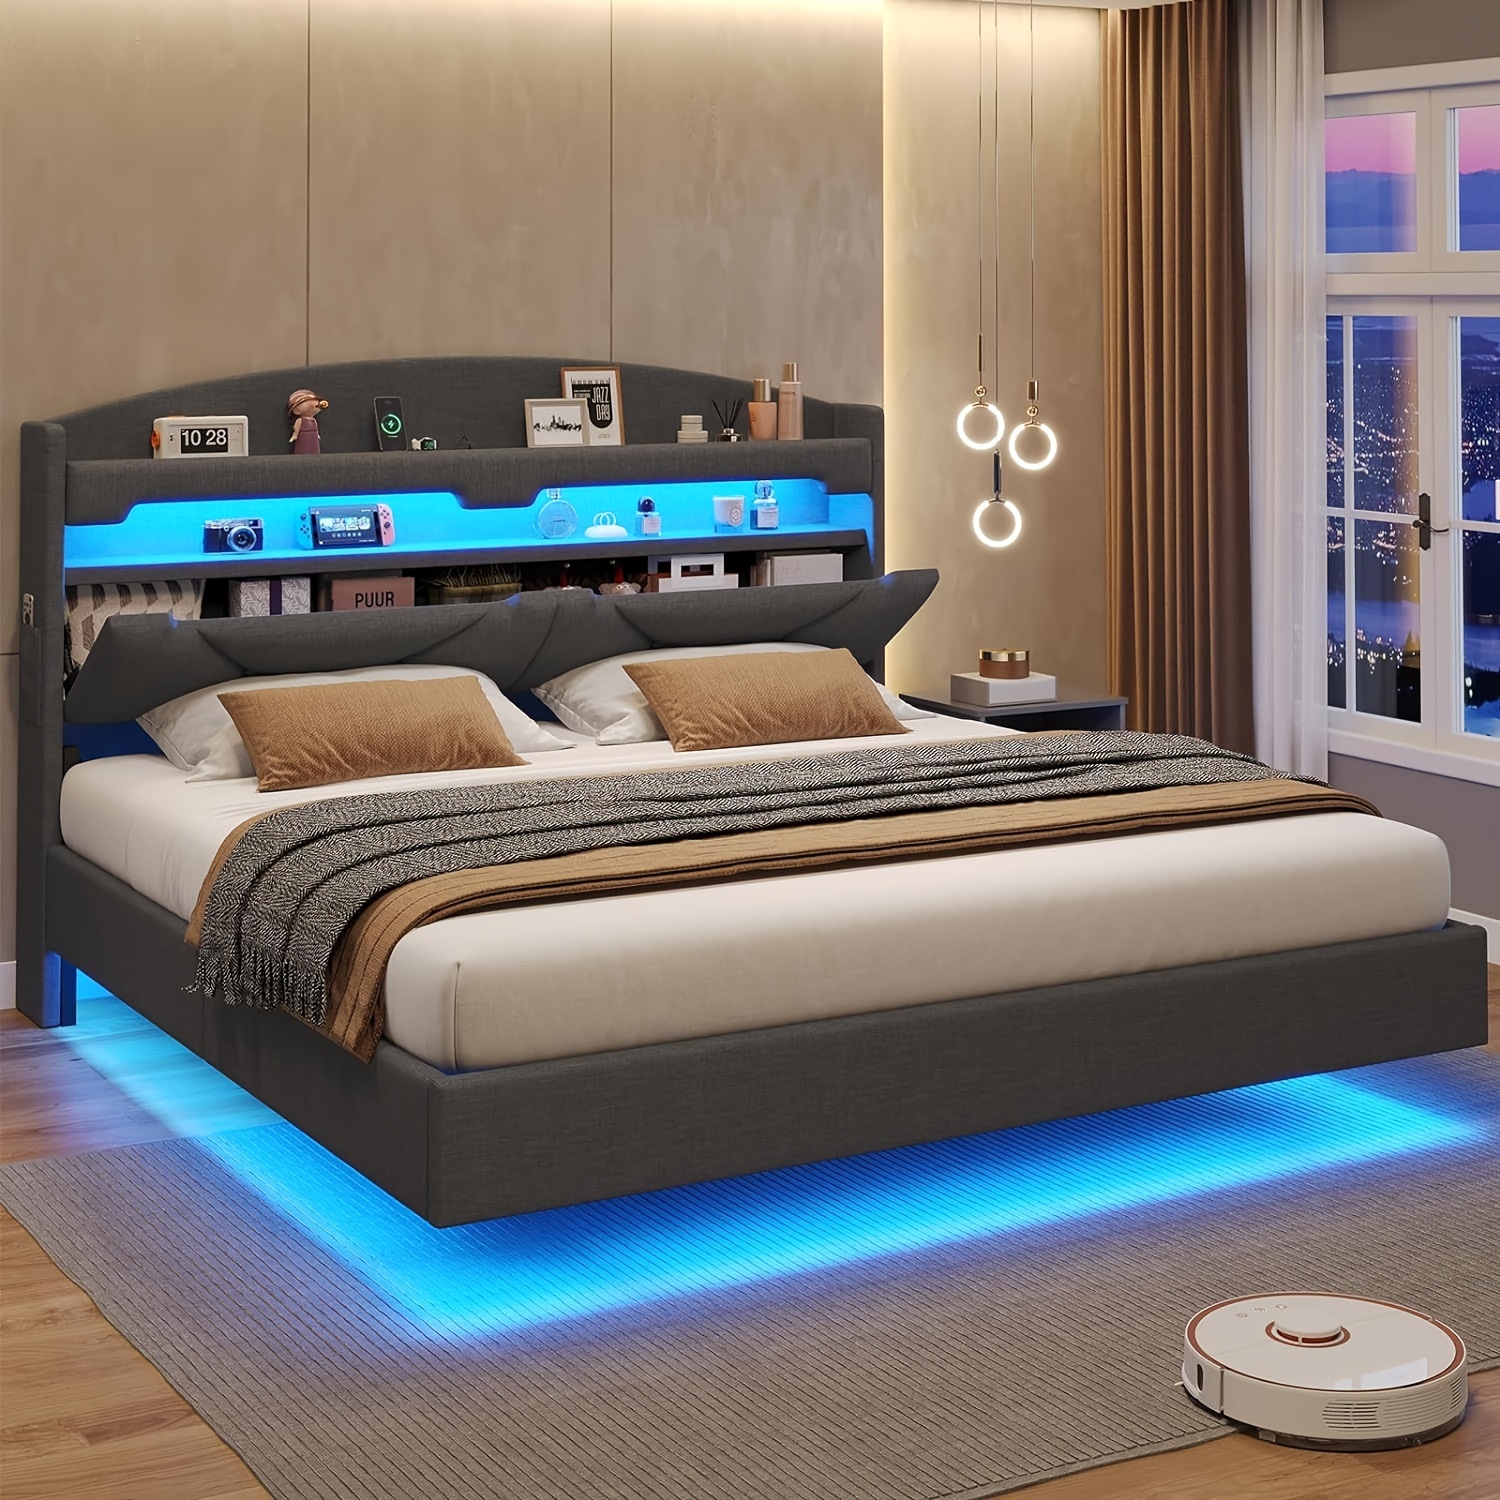 

Floating Linen Bed Frame With Led Lights & Charging Station, King Upholstered Platform Bed With Storage Space For Bedroom, Dark Gray